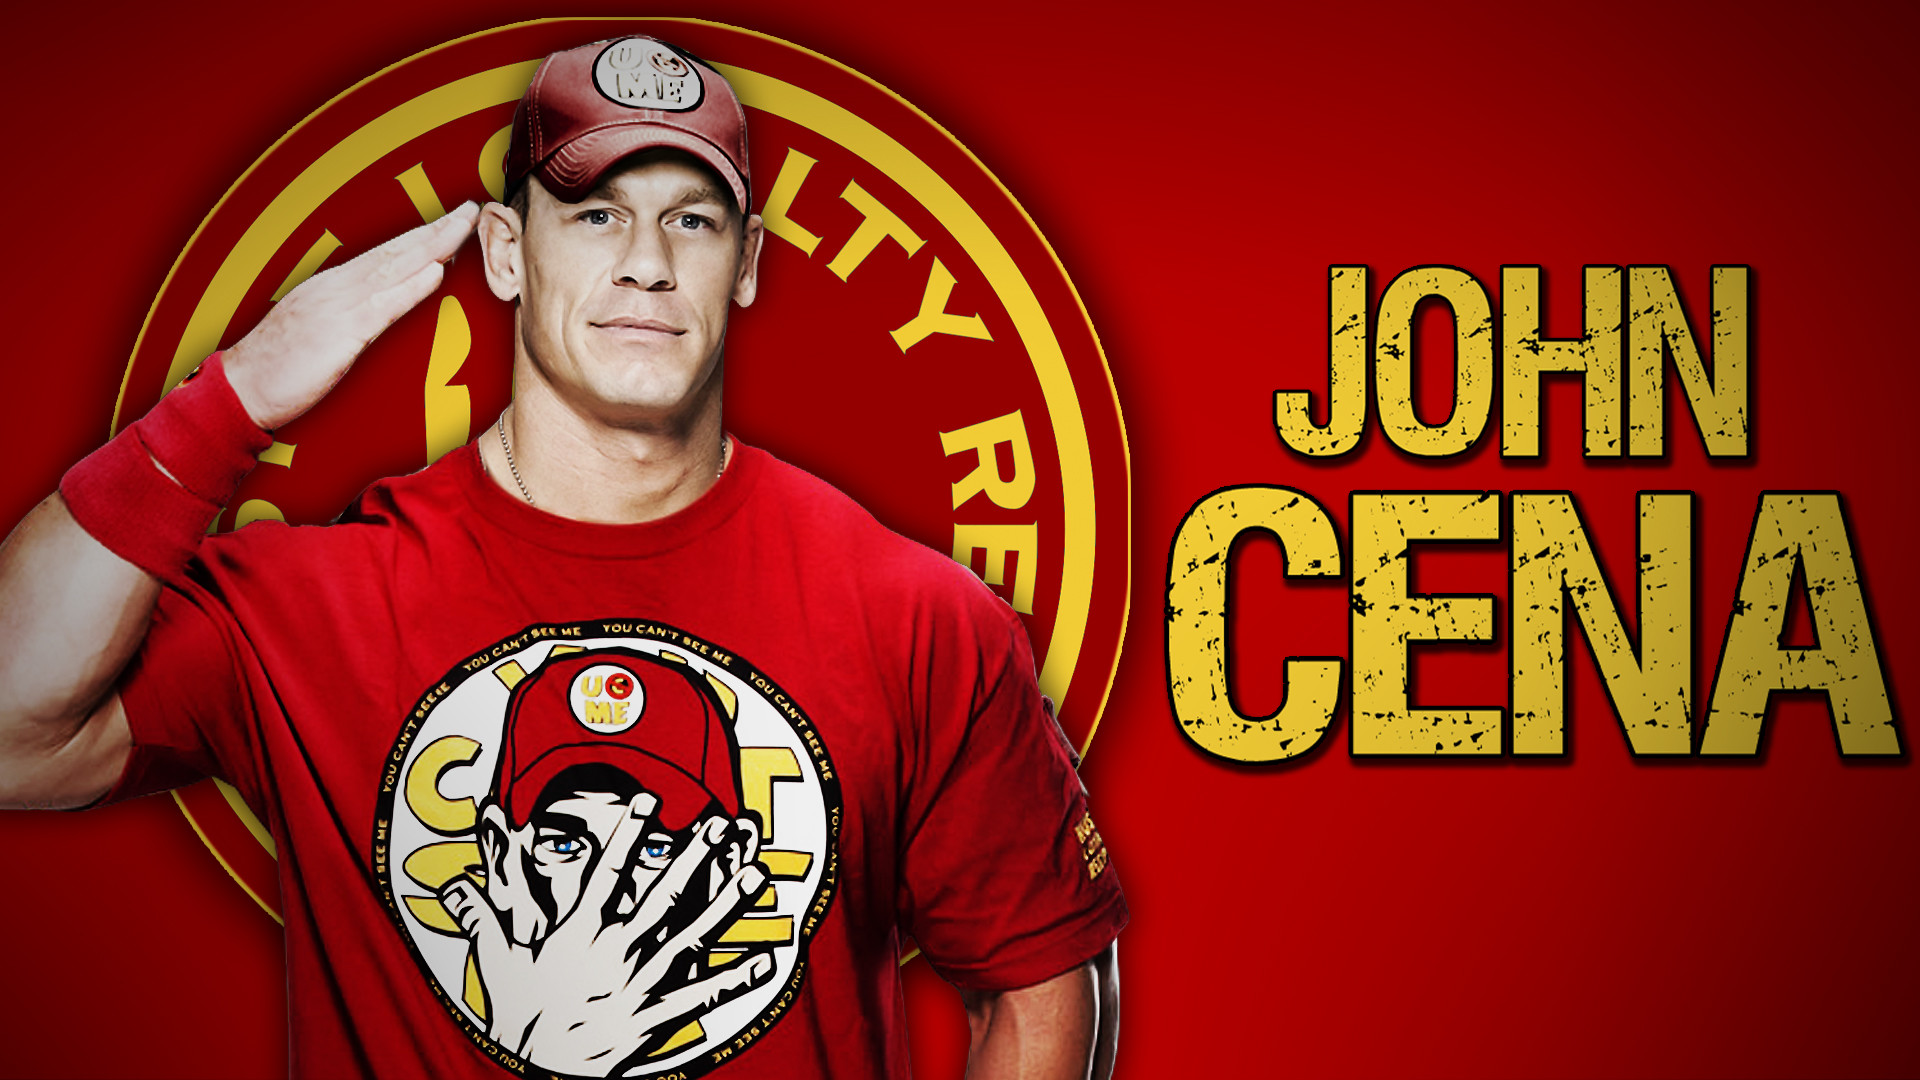 John Cena Wallpapers Free Download - John Cena World Heavyweight Champion 2013 - HD Wallpaper 